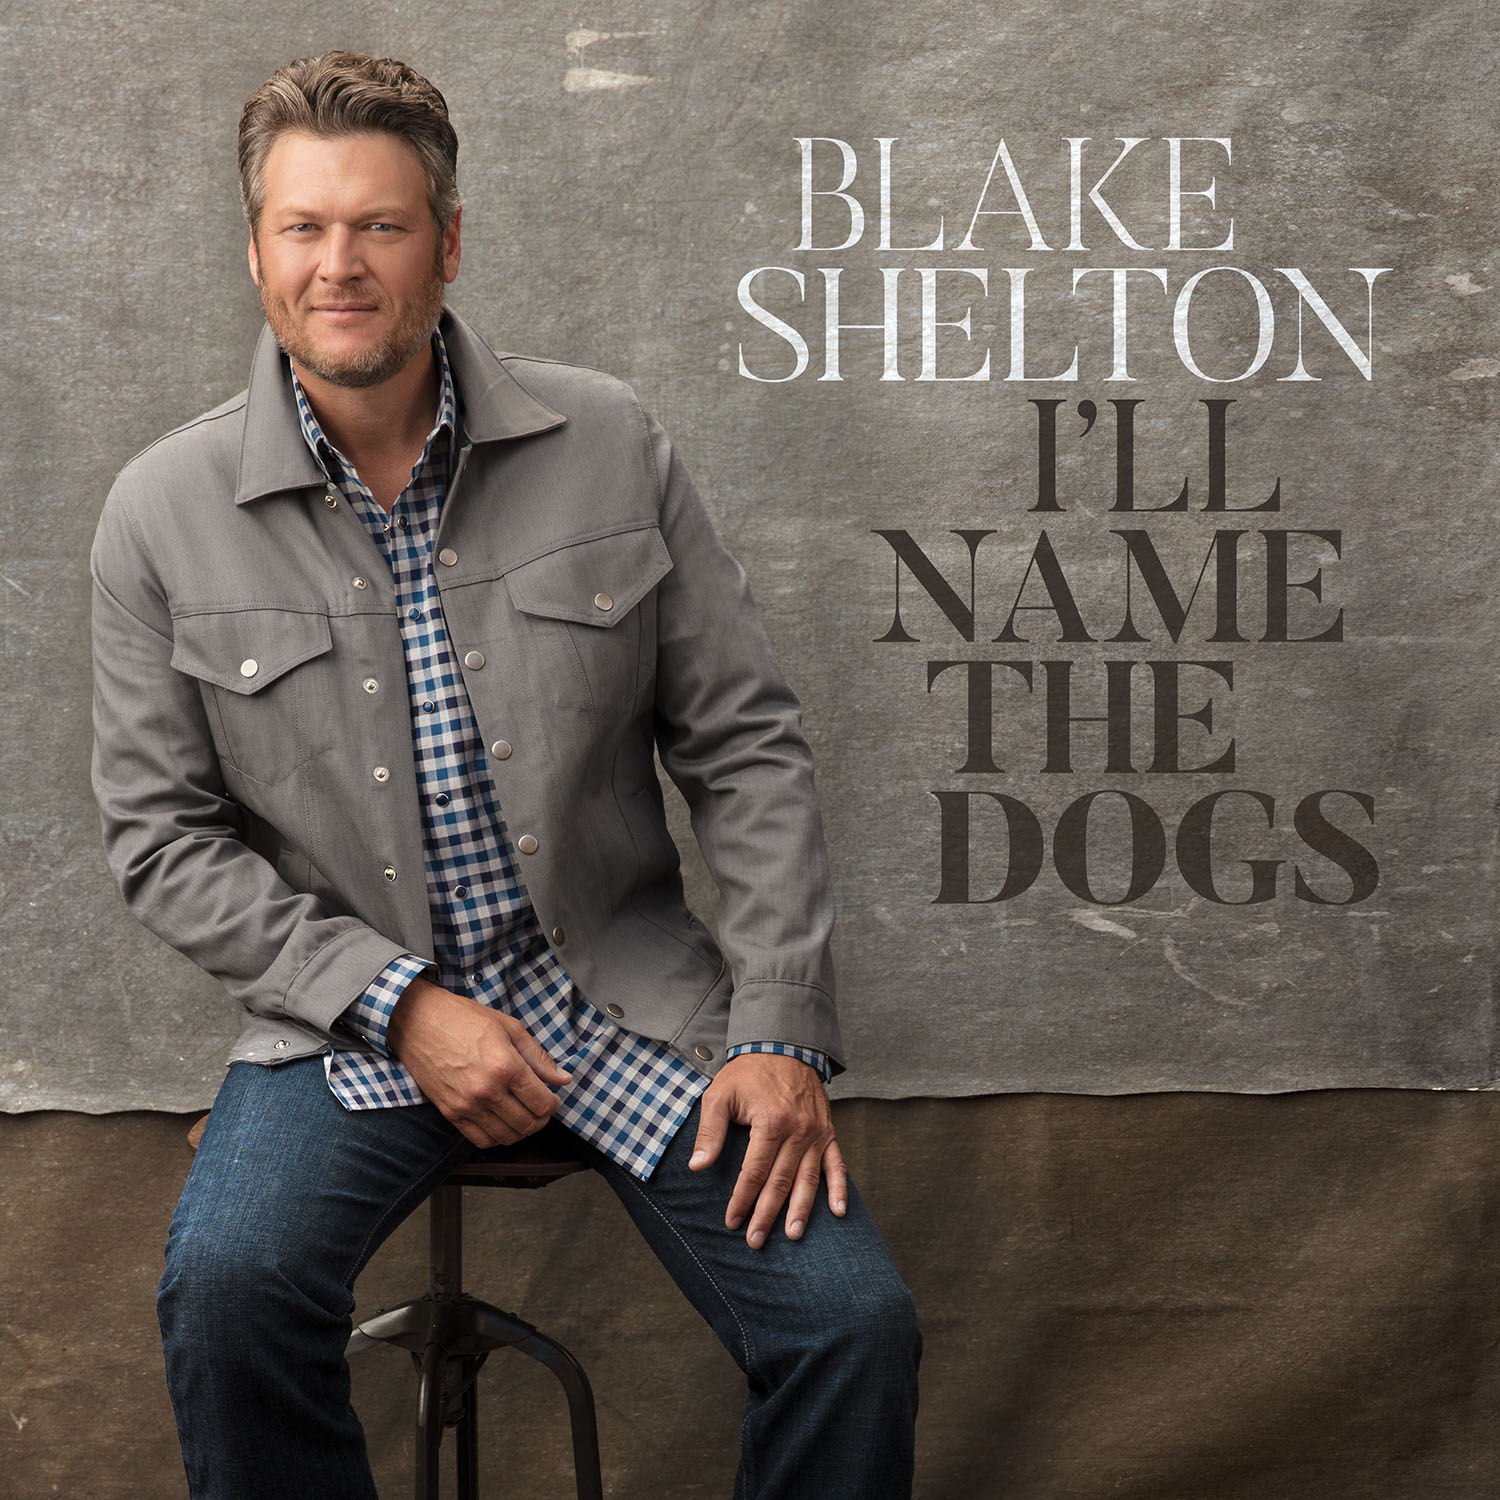 Blake Shelton Releases New Single “I’ll Name the Dogs”